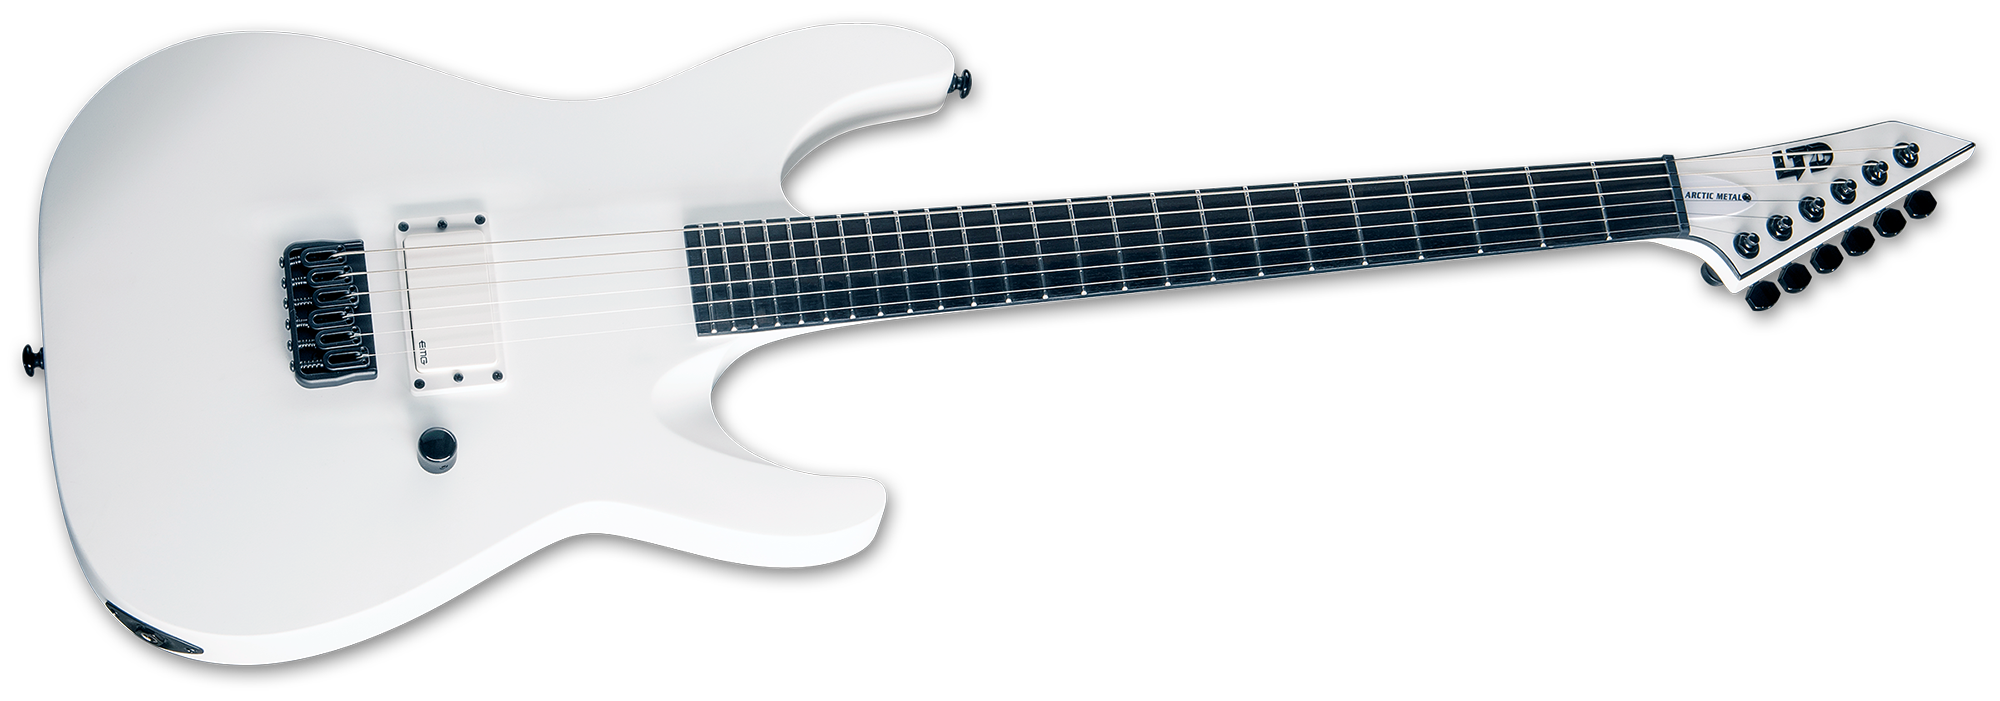 Ltd M-ht Arctic Metal H Emg Ht Eb - Snow White Satin - Str shape electric guitar - Variation 1